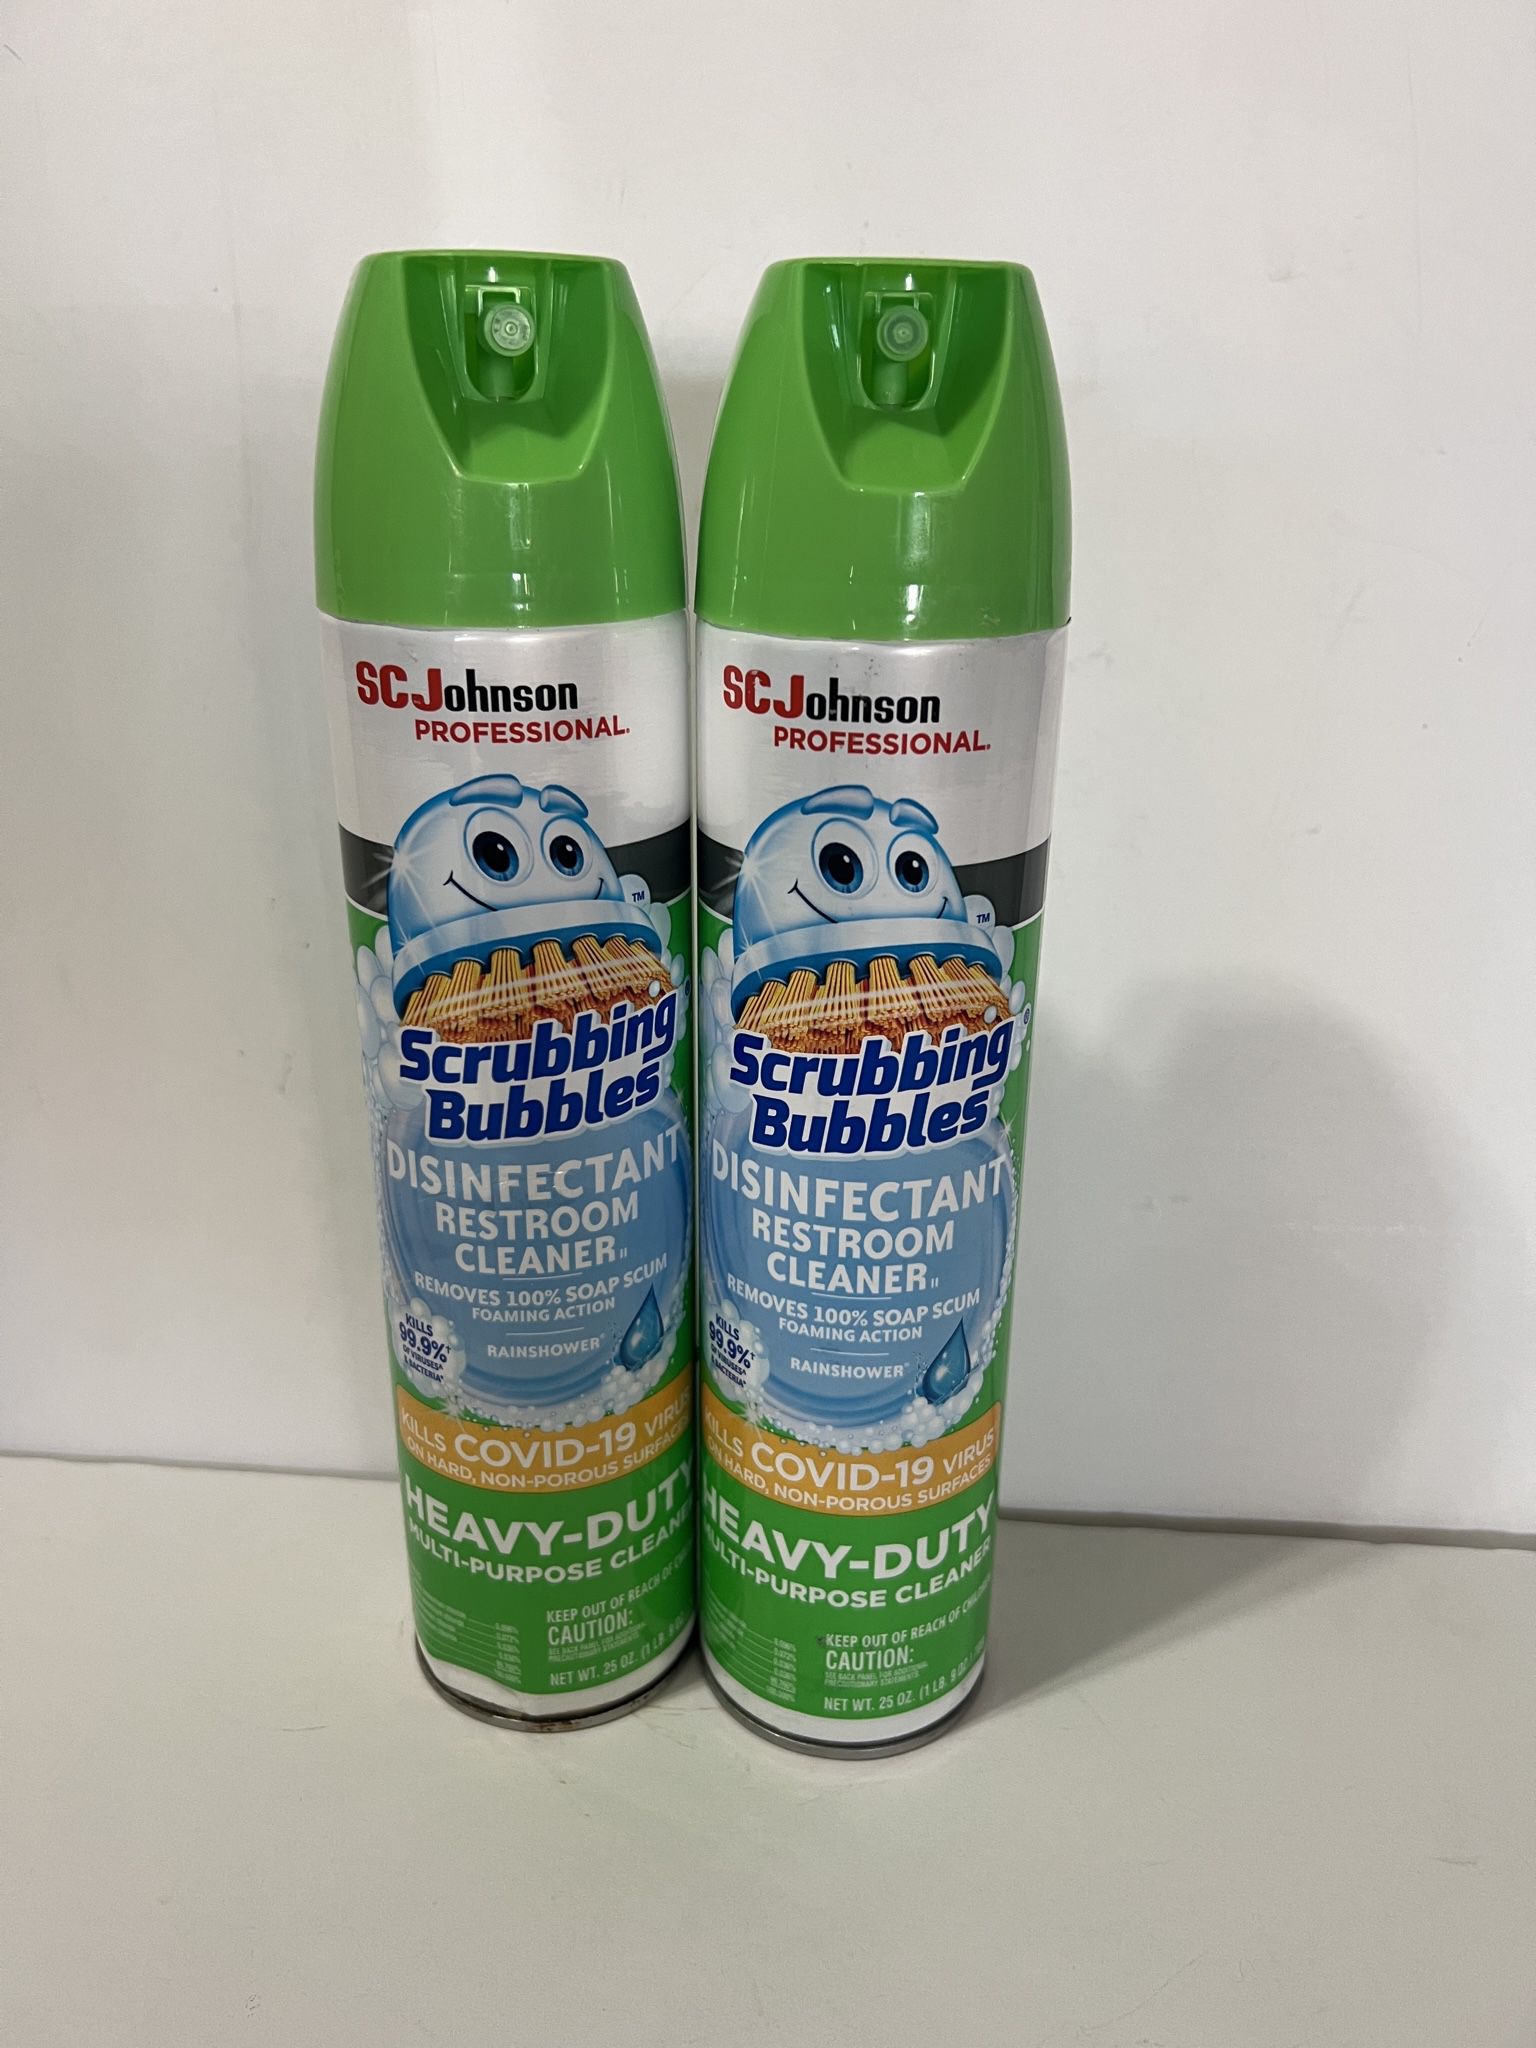 Scrubbing Bubbles Disinfectant Restroom Cleaner Multi Purpose Fresh Clean 25 oz 2x $5